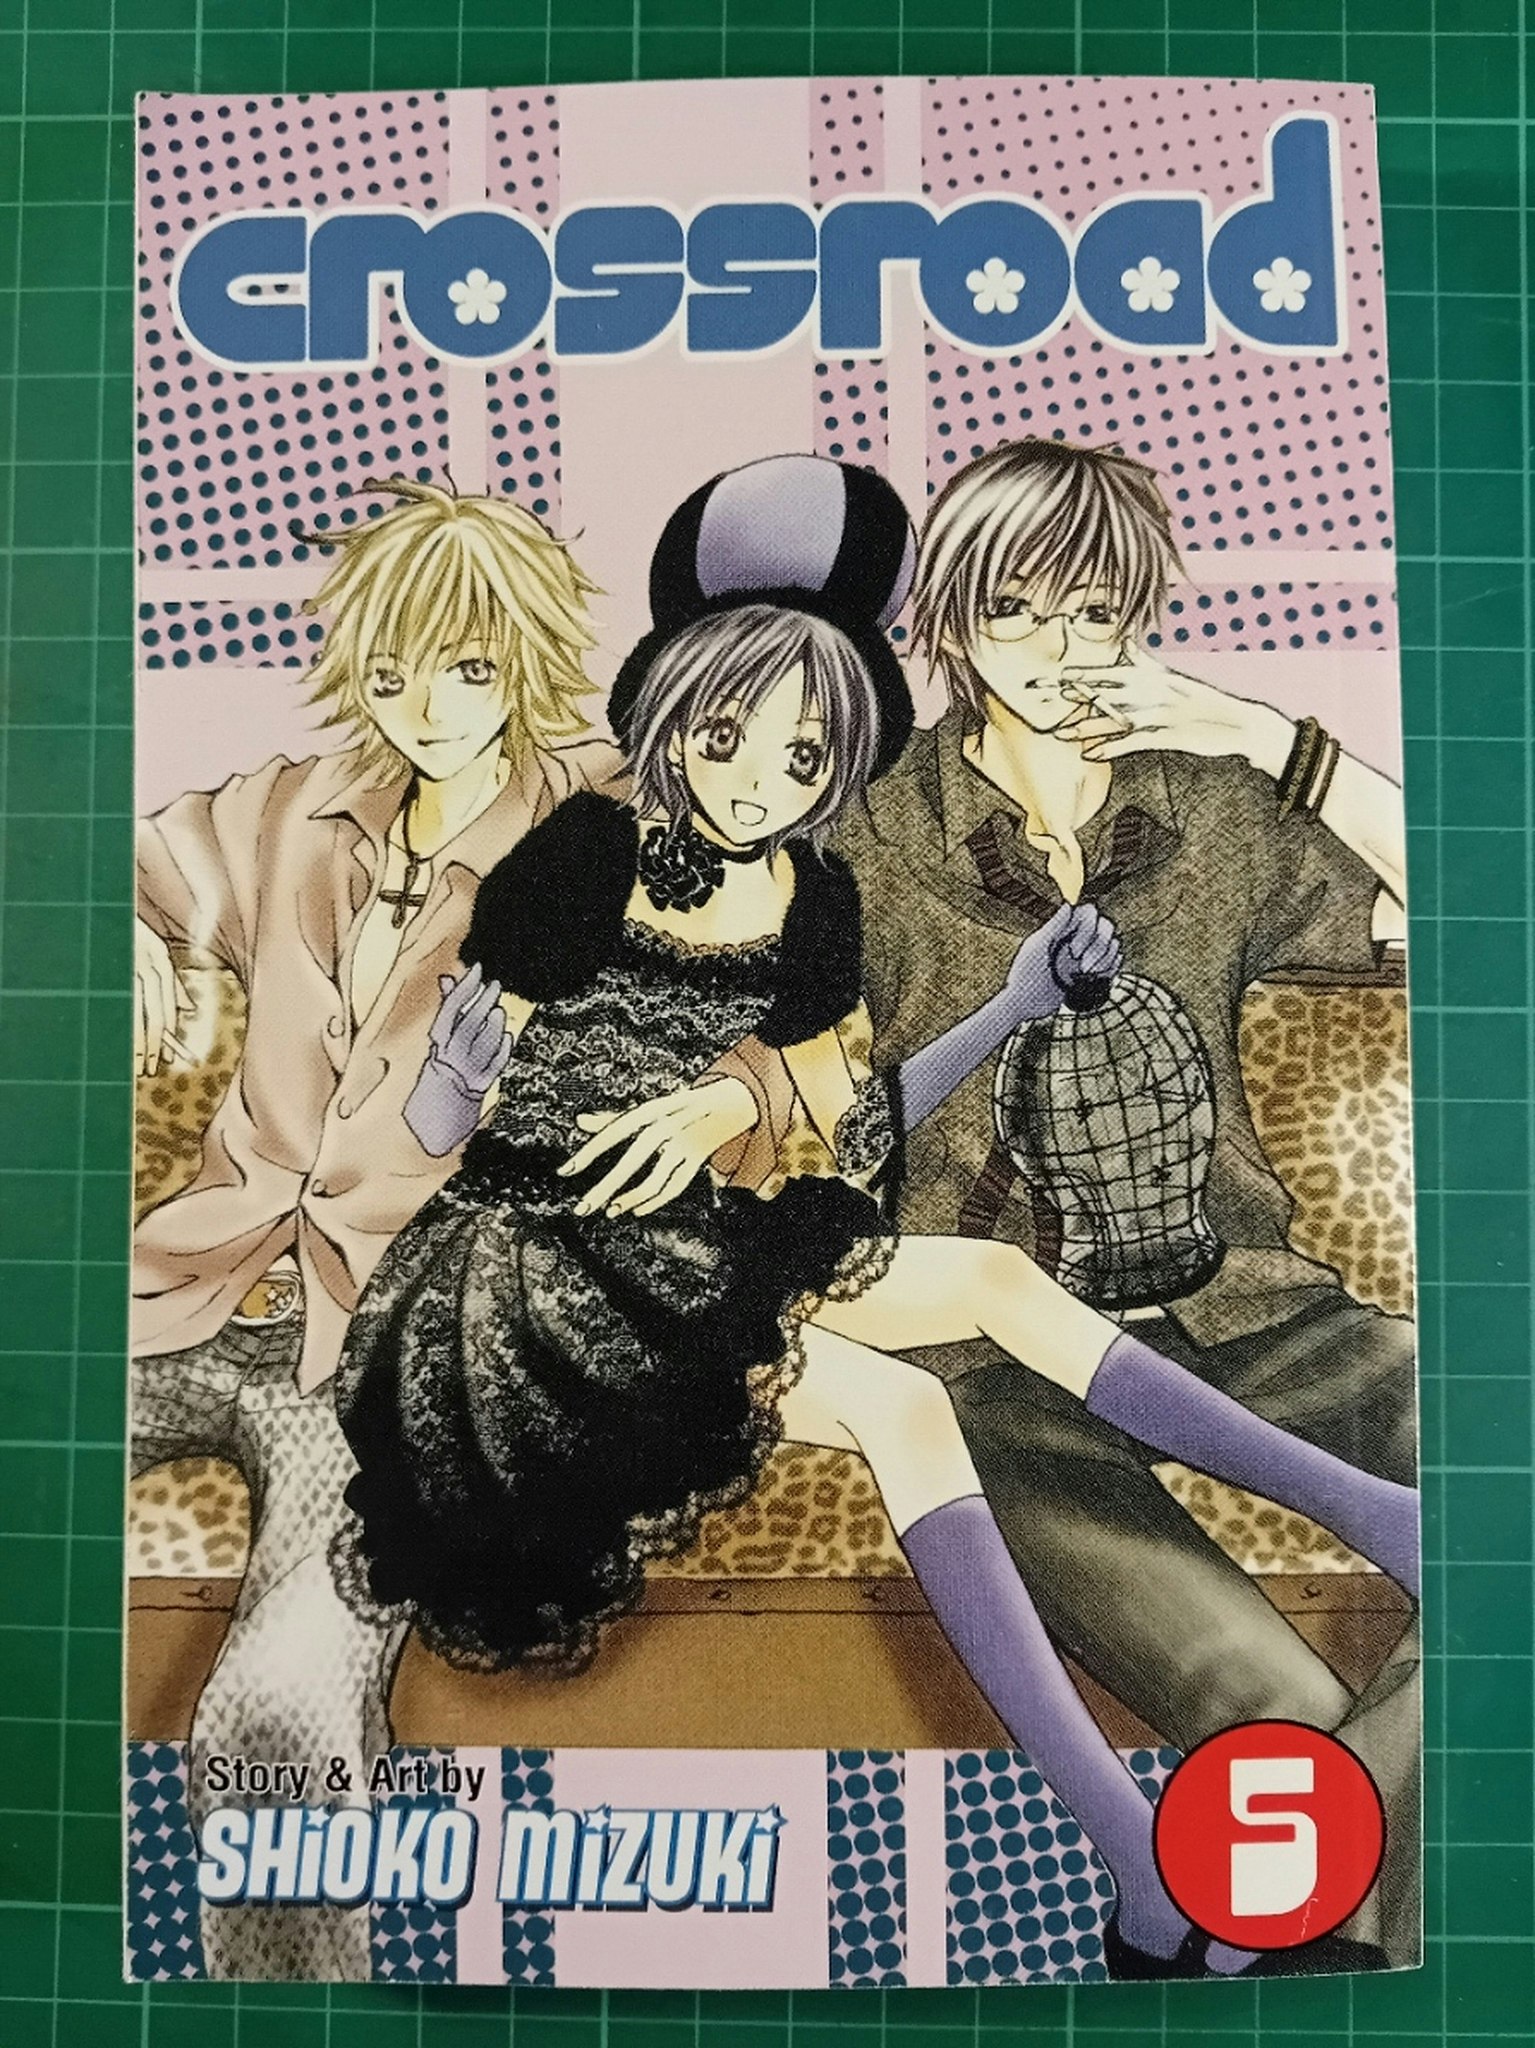 Crossroad 05 (USA)